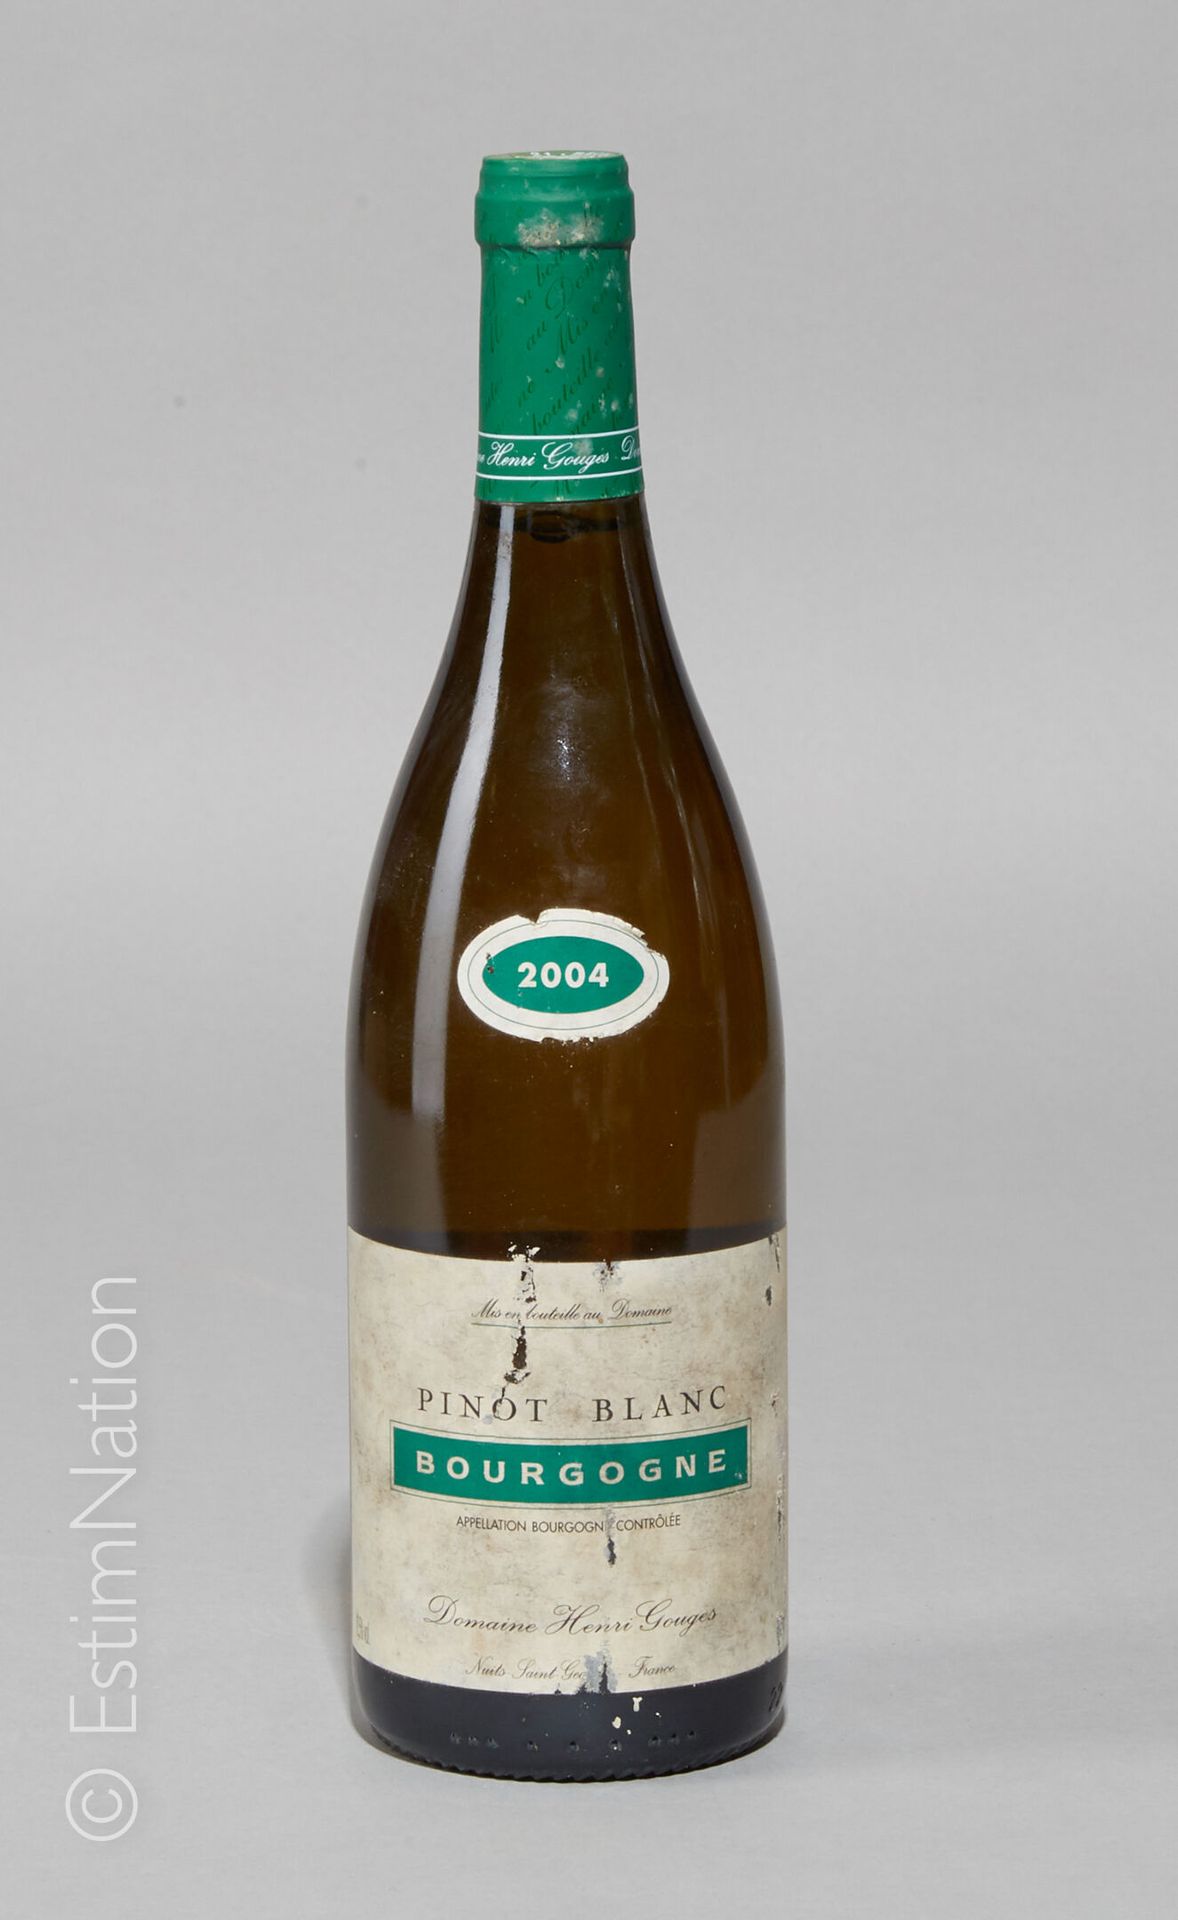 BOURGOGNE 1 bottiglia Bourgogne 2004 (Pinot bianco) Domaine Henri Gouges